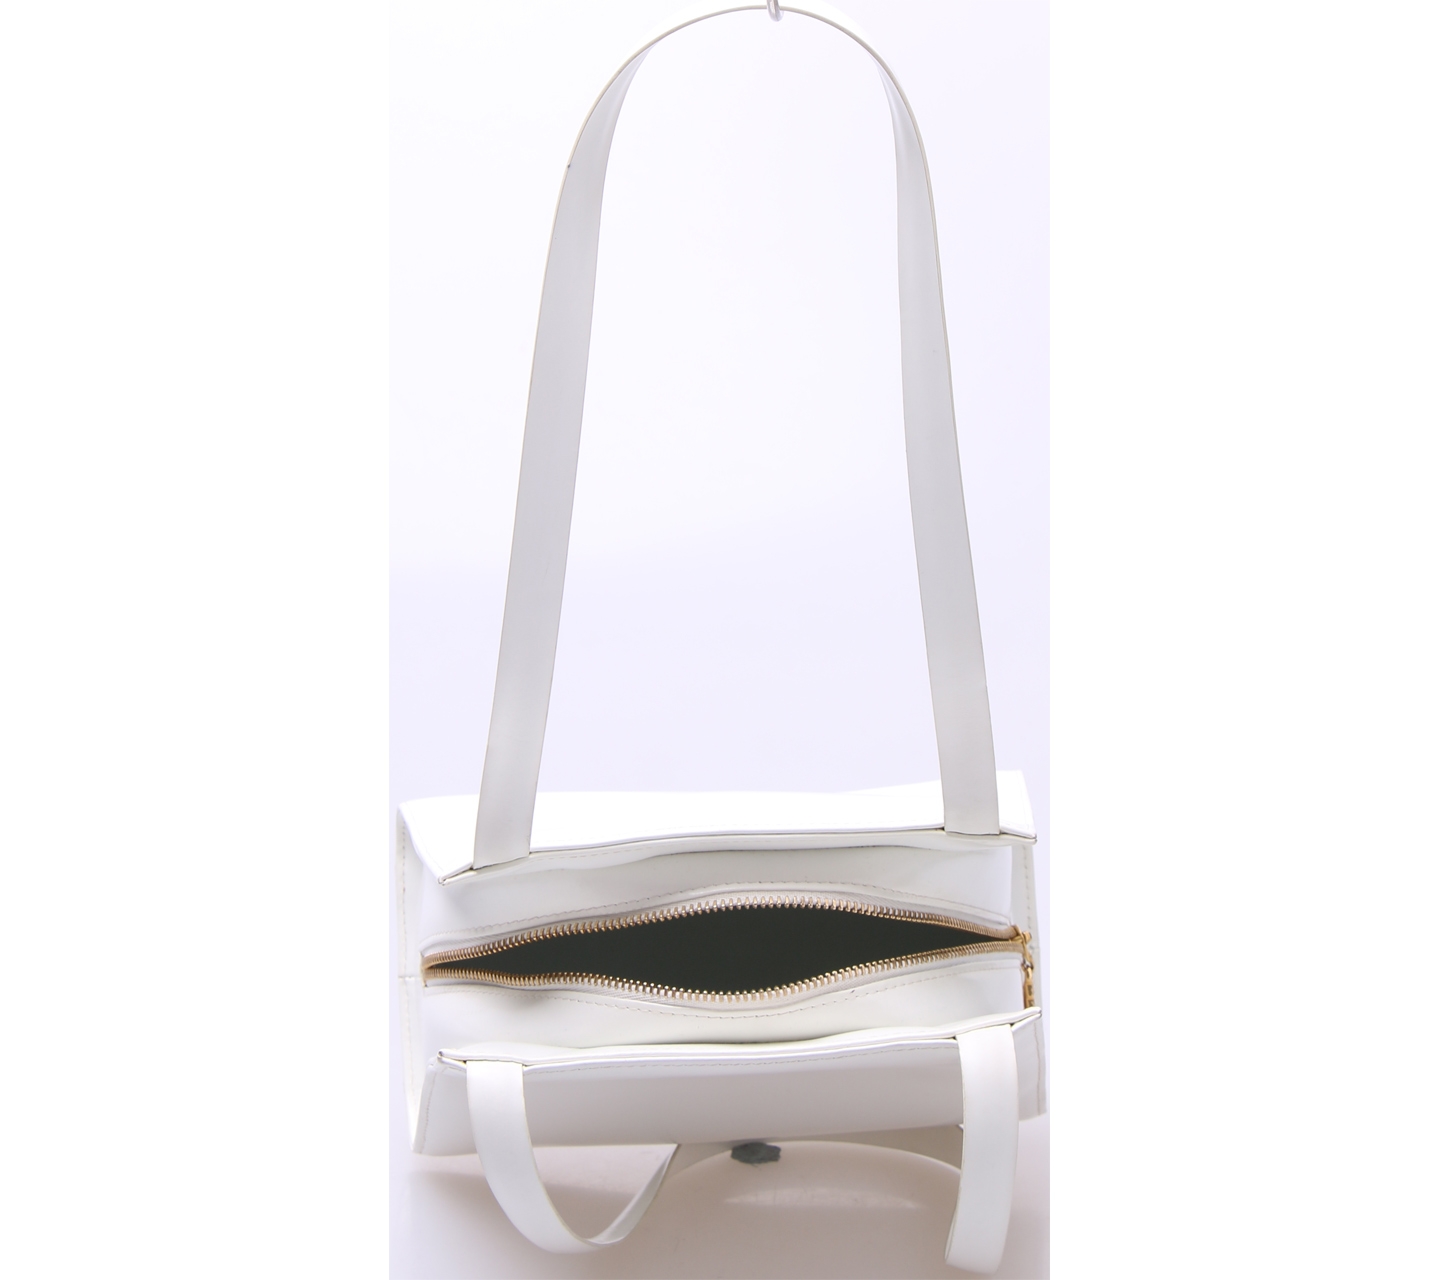 Braun Buffle White Handbag